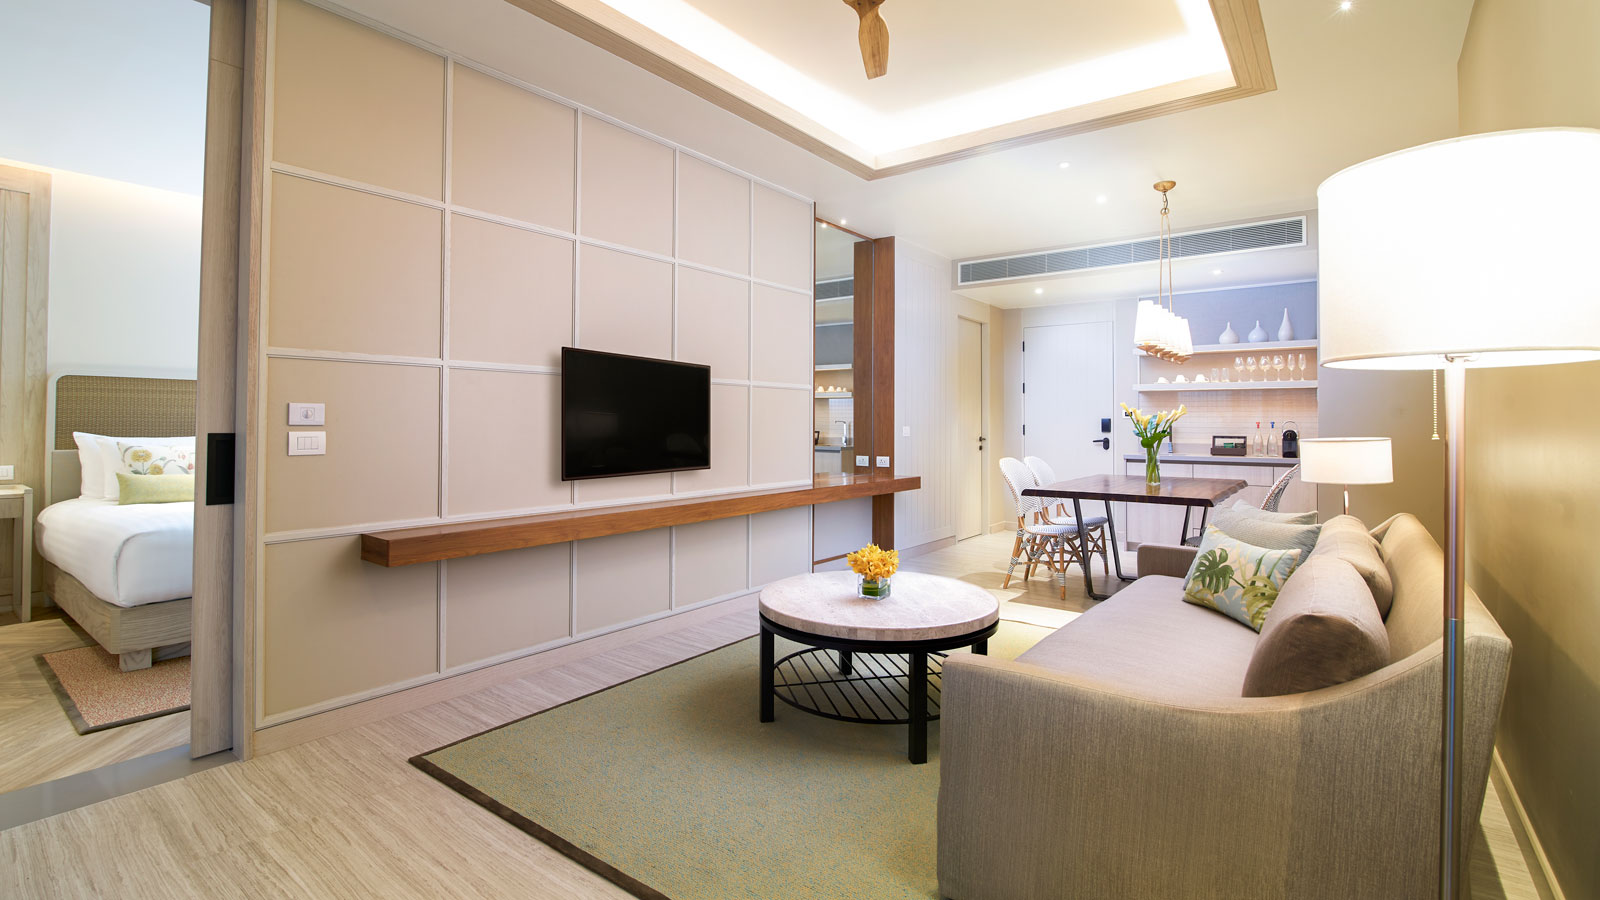 Flat-screen TV in living room in Amari Suite